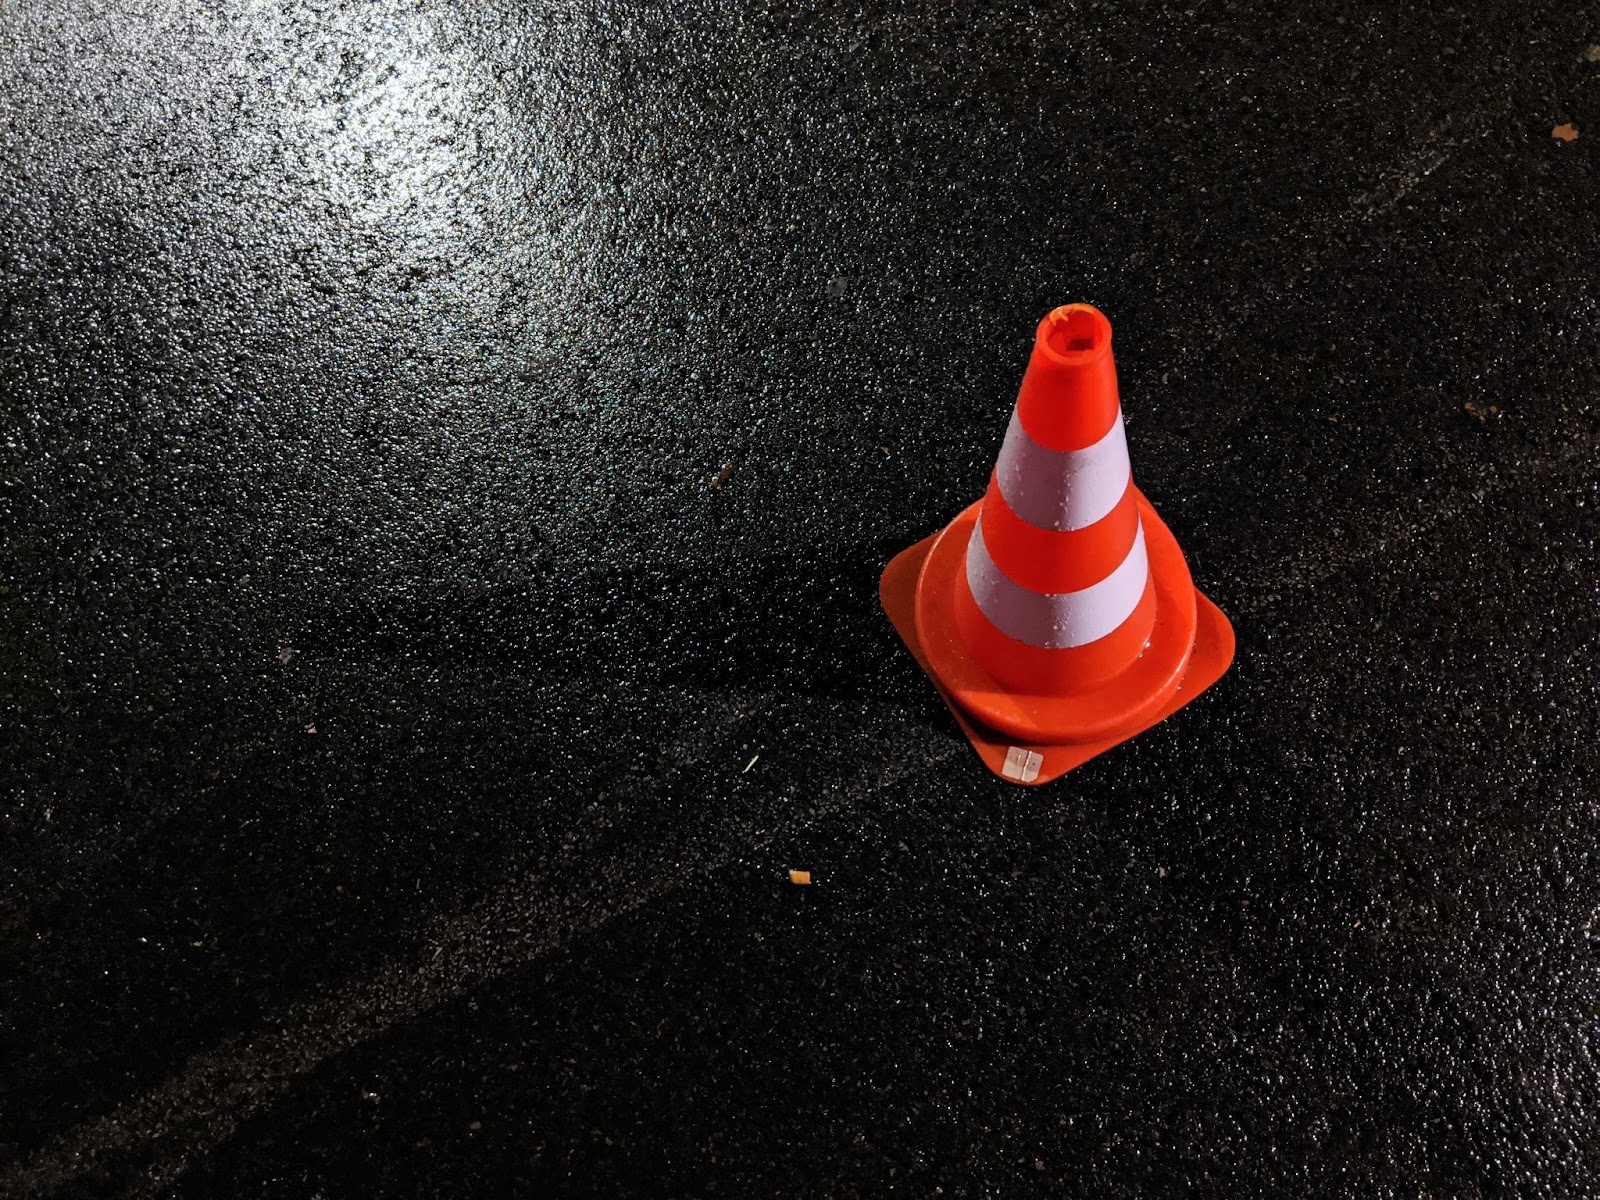 orange pylon cones, road safety, hazards, driving, accident